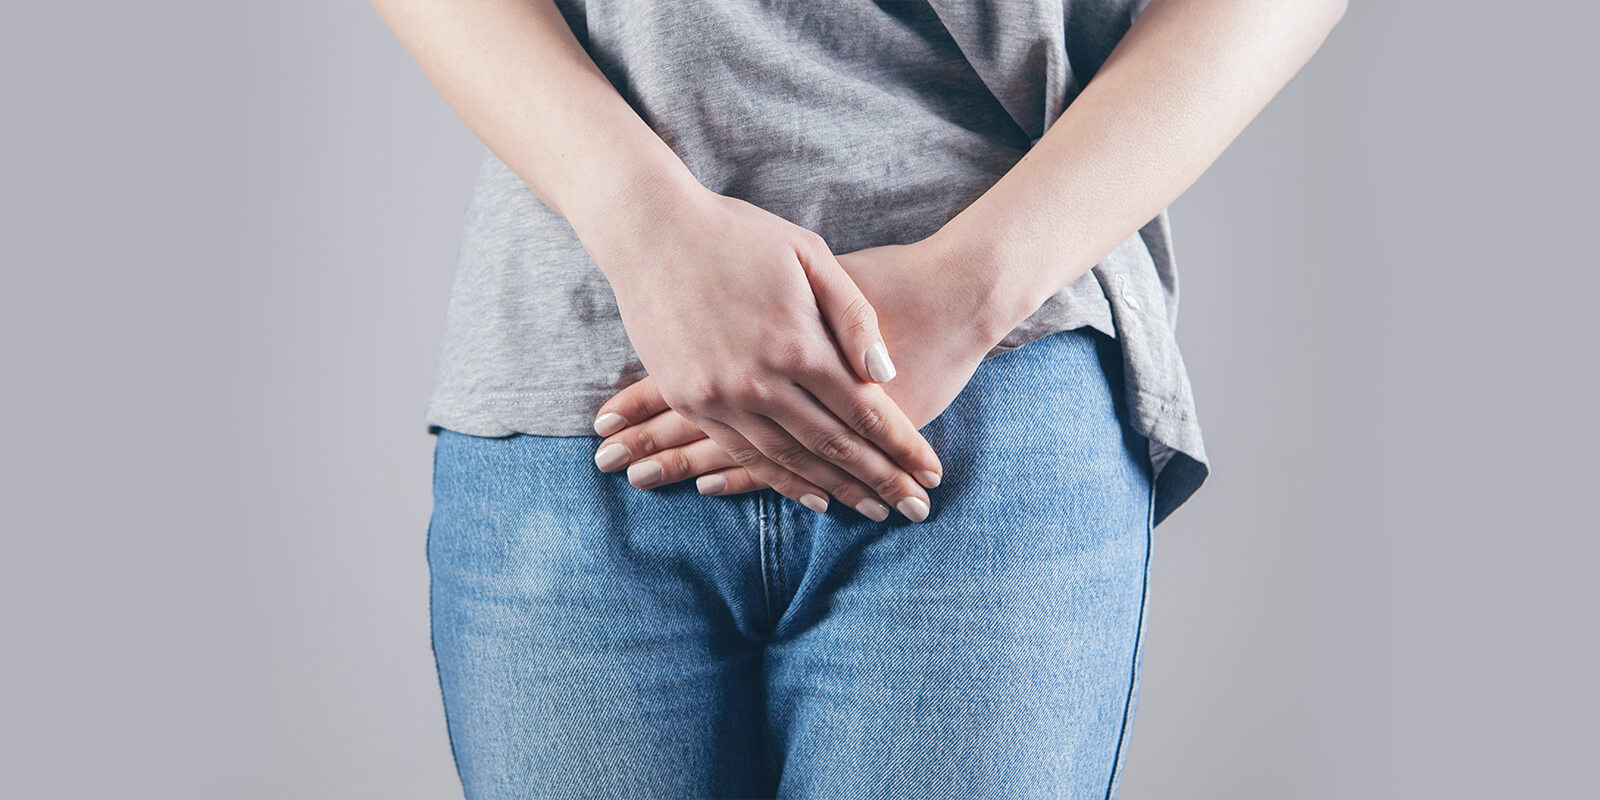 Endometriosis affects women's health 